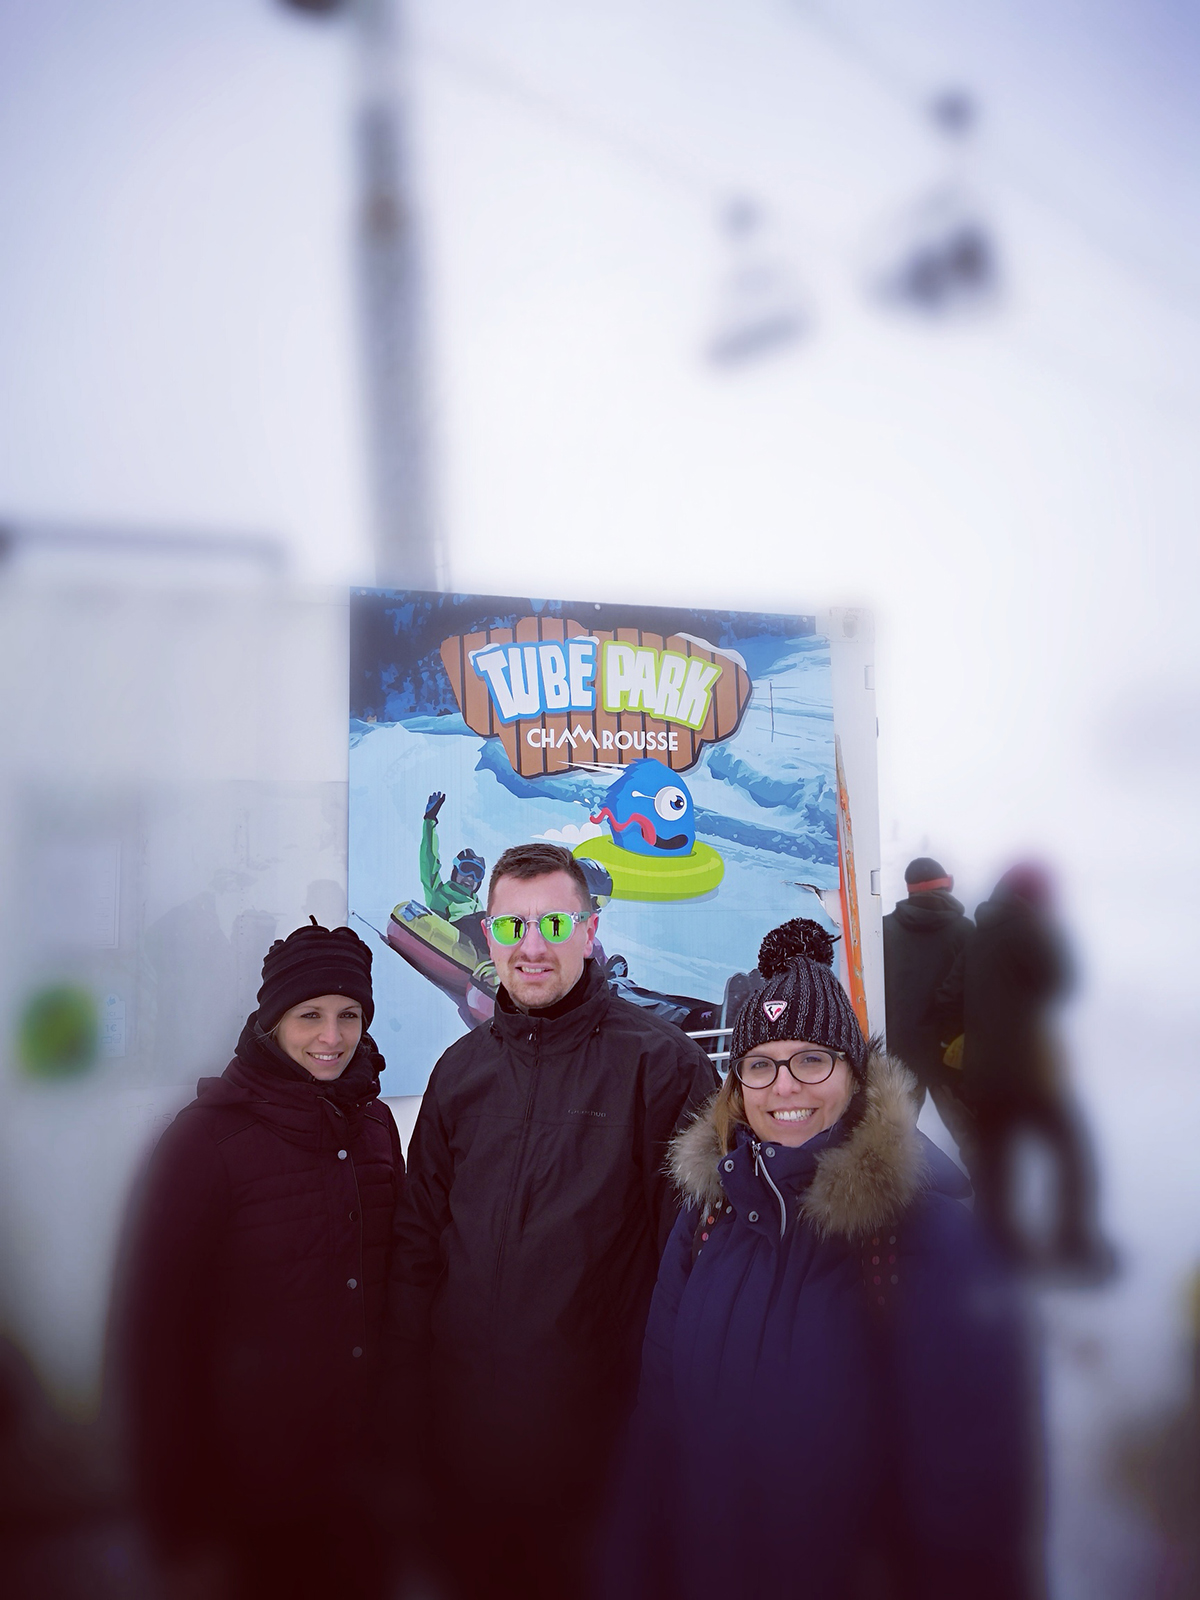 Chamrousse blog expérience test snowtubing tube park famille wise ride station ski montagne isère alpes france - © EM - OT Chamrousse